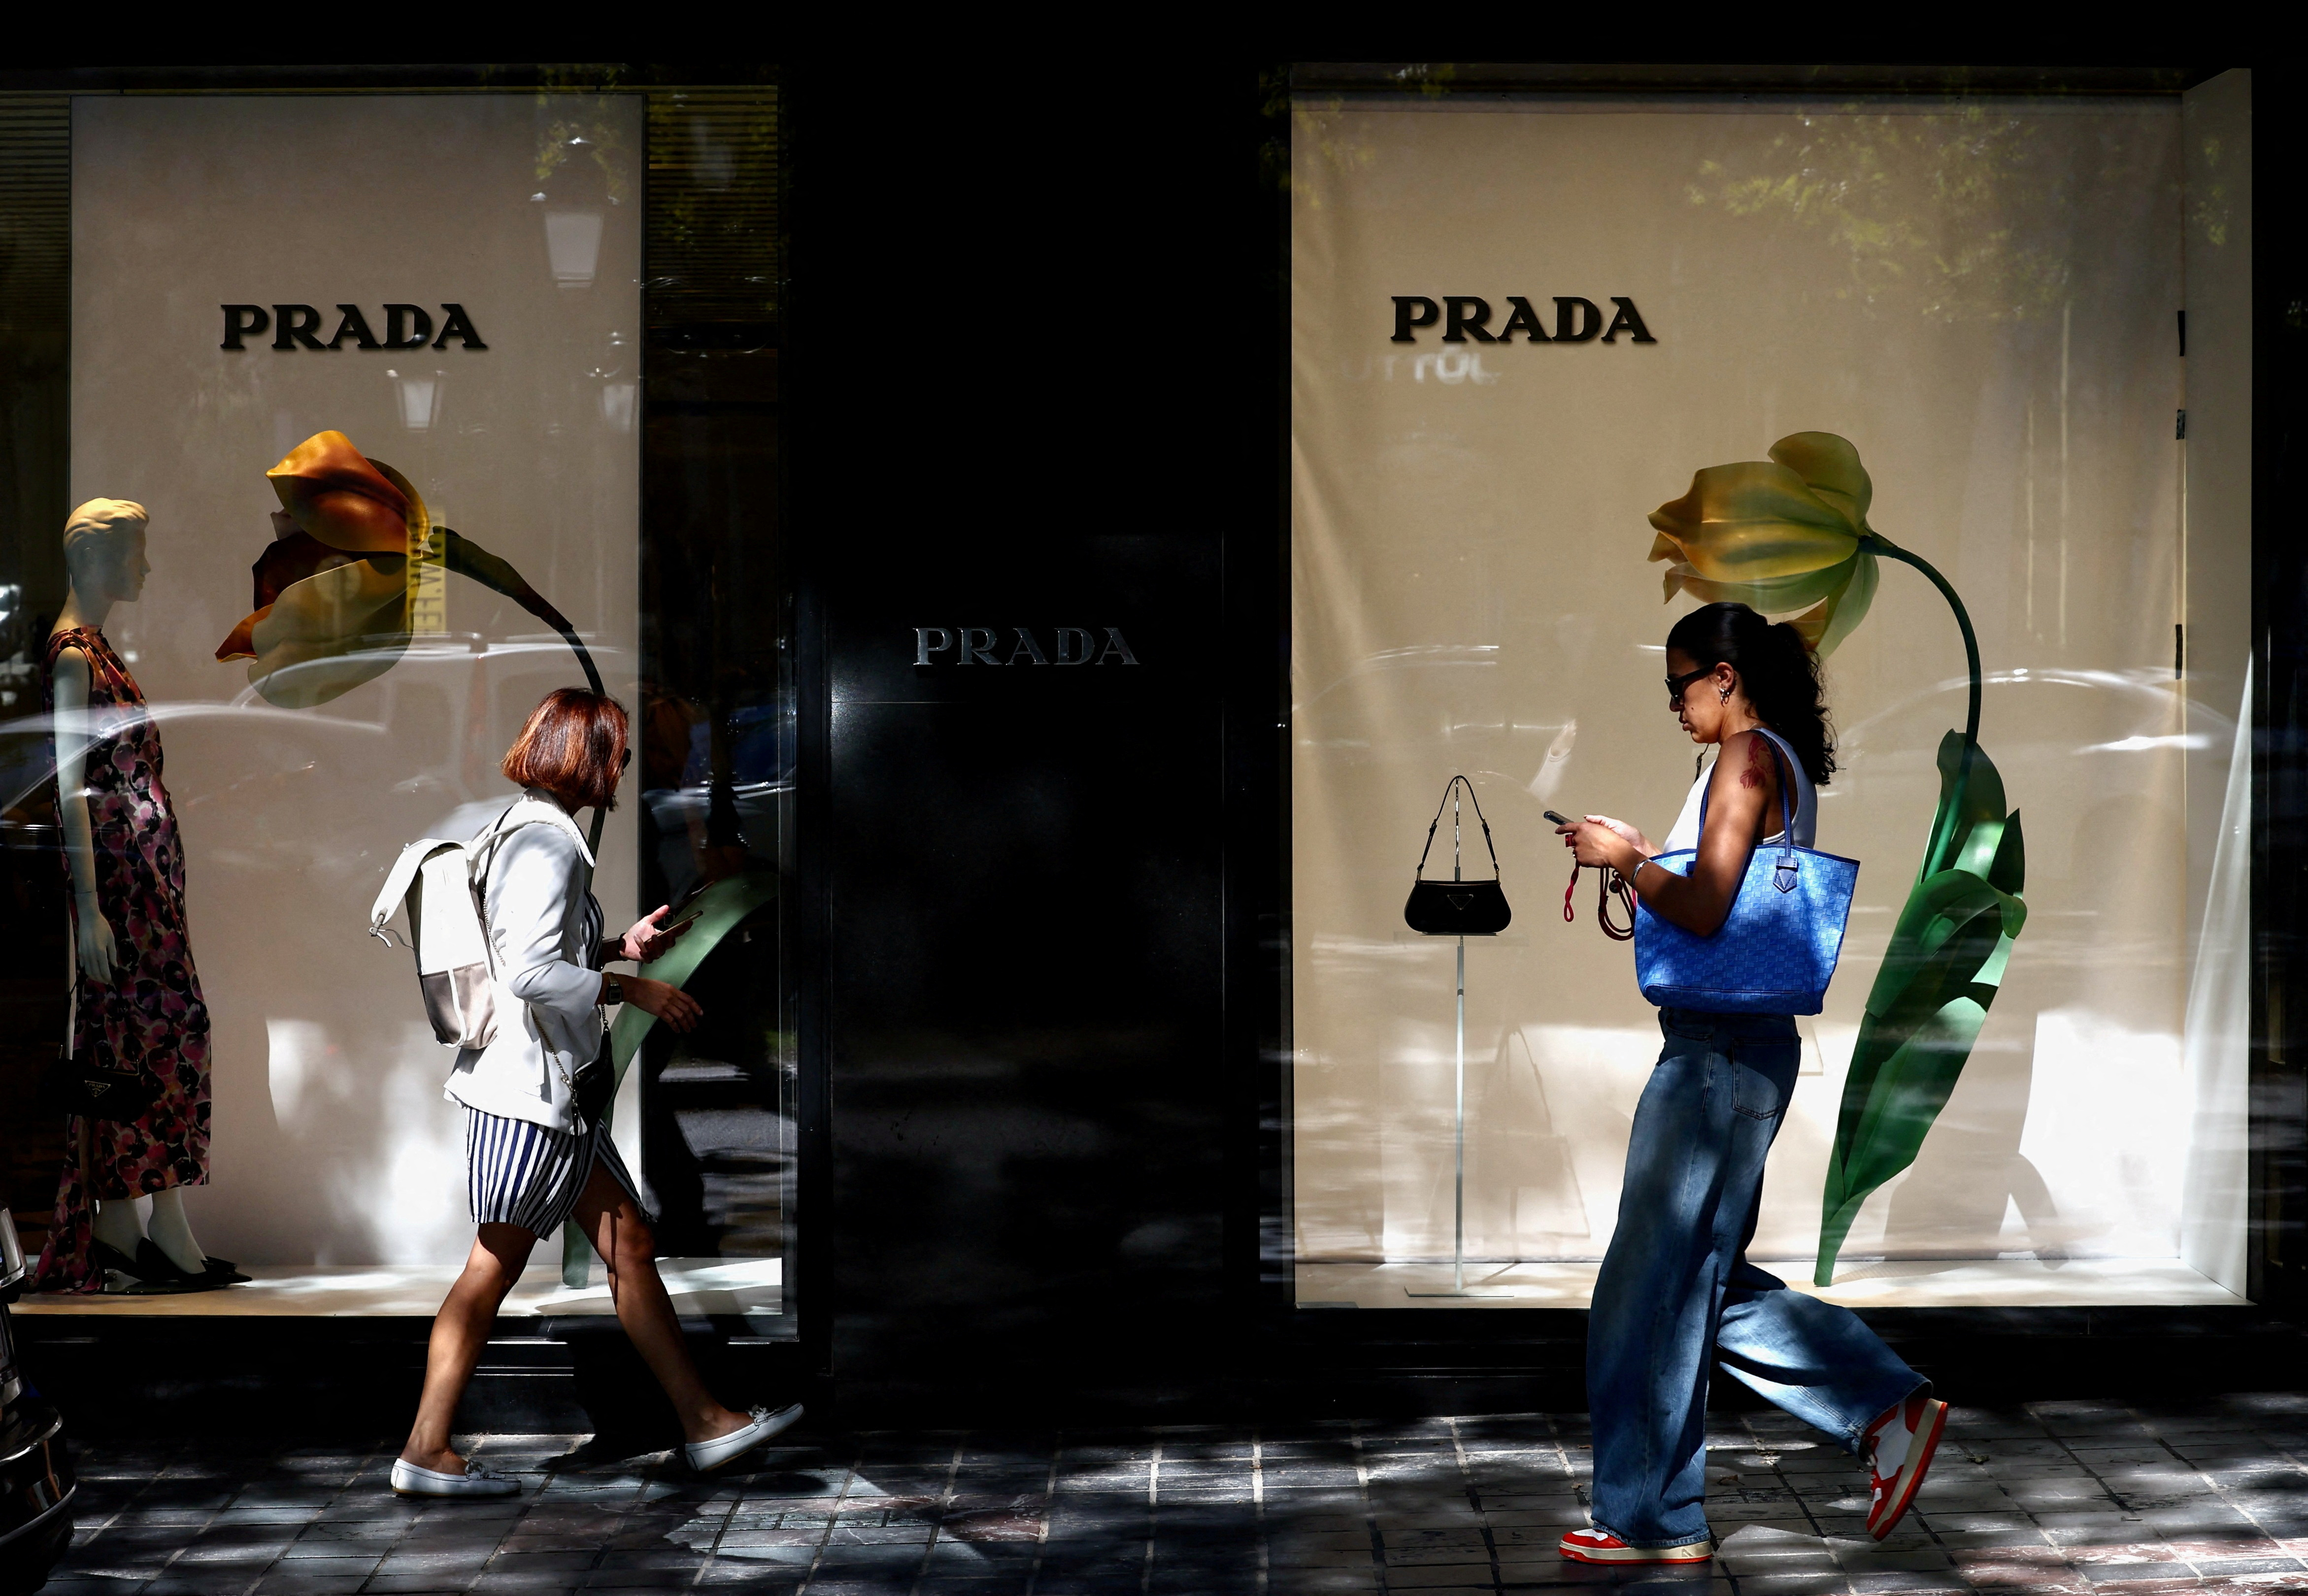 Prada revenues rise despite struggles in Americas